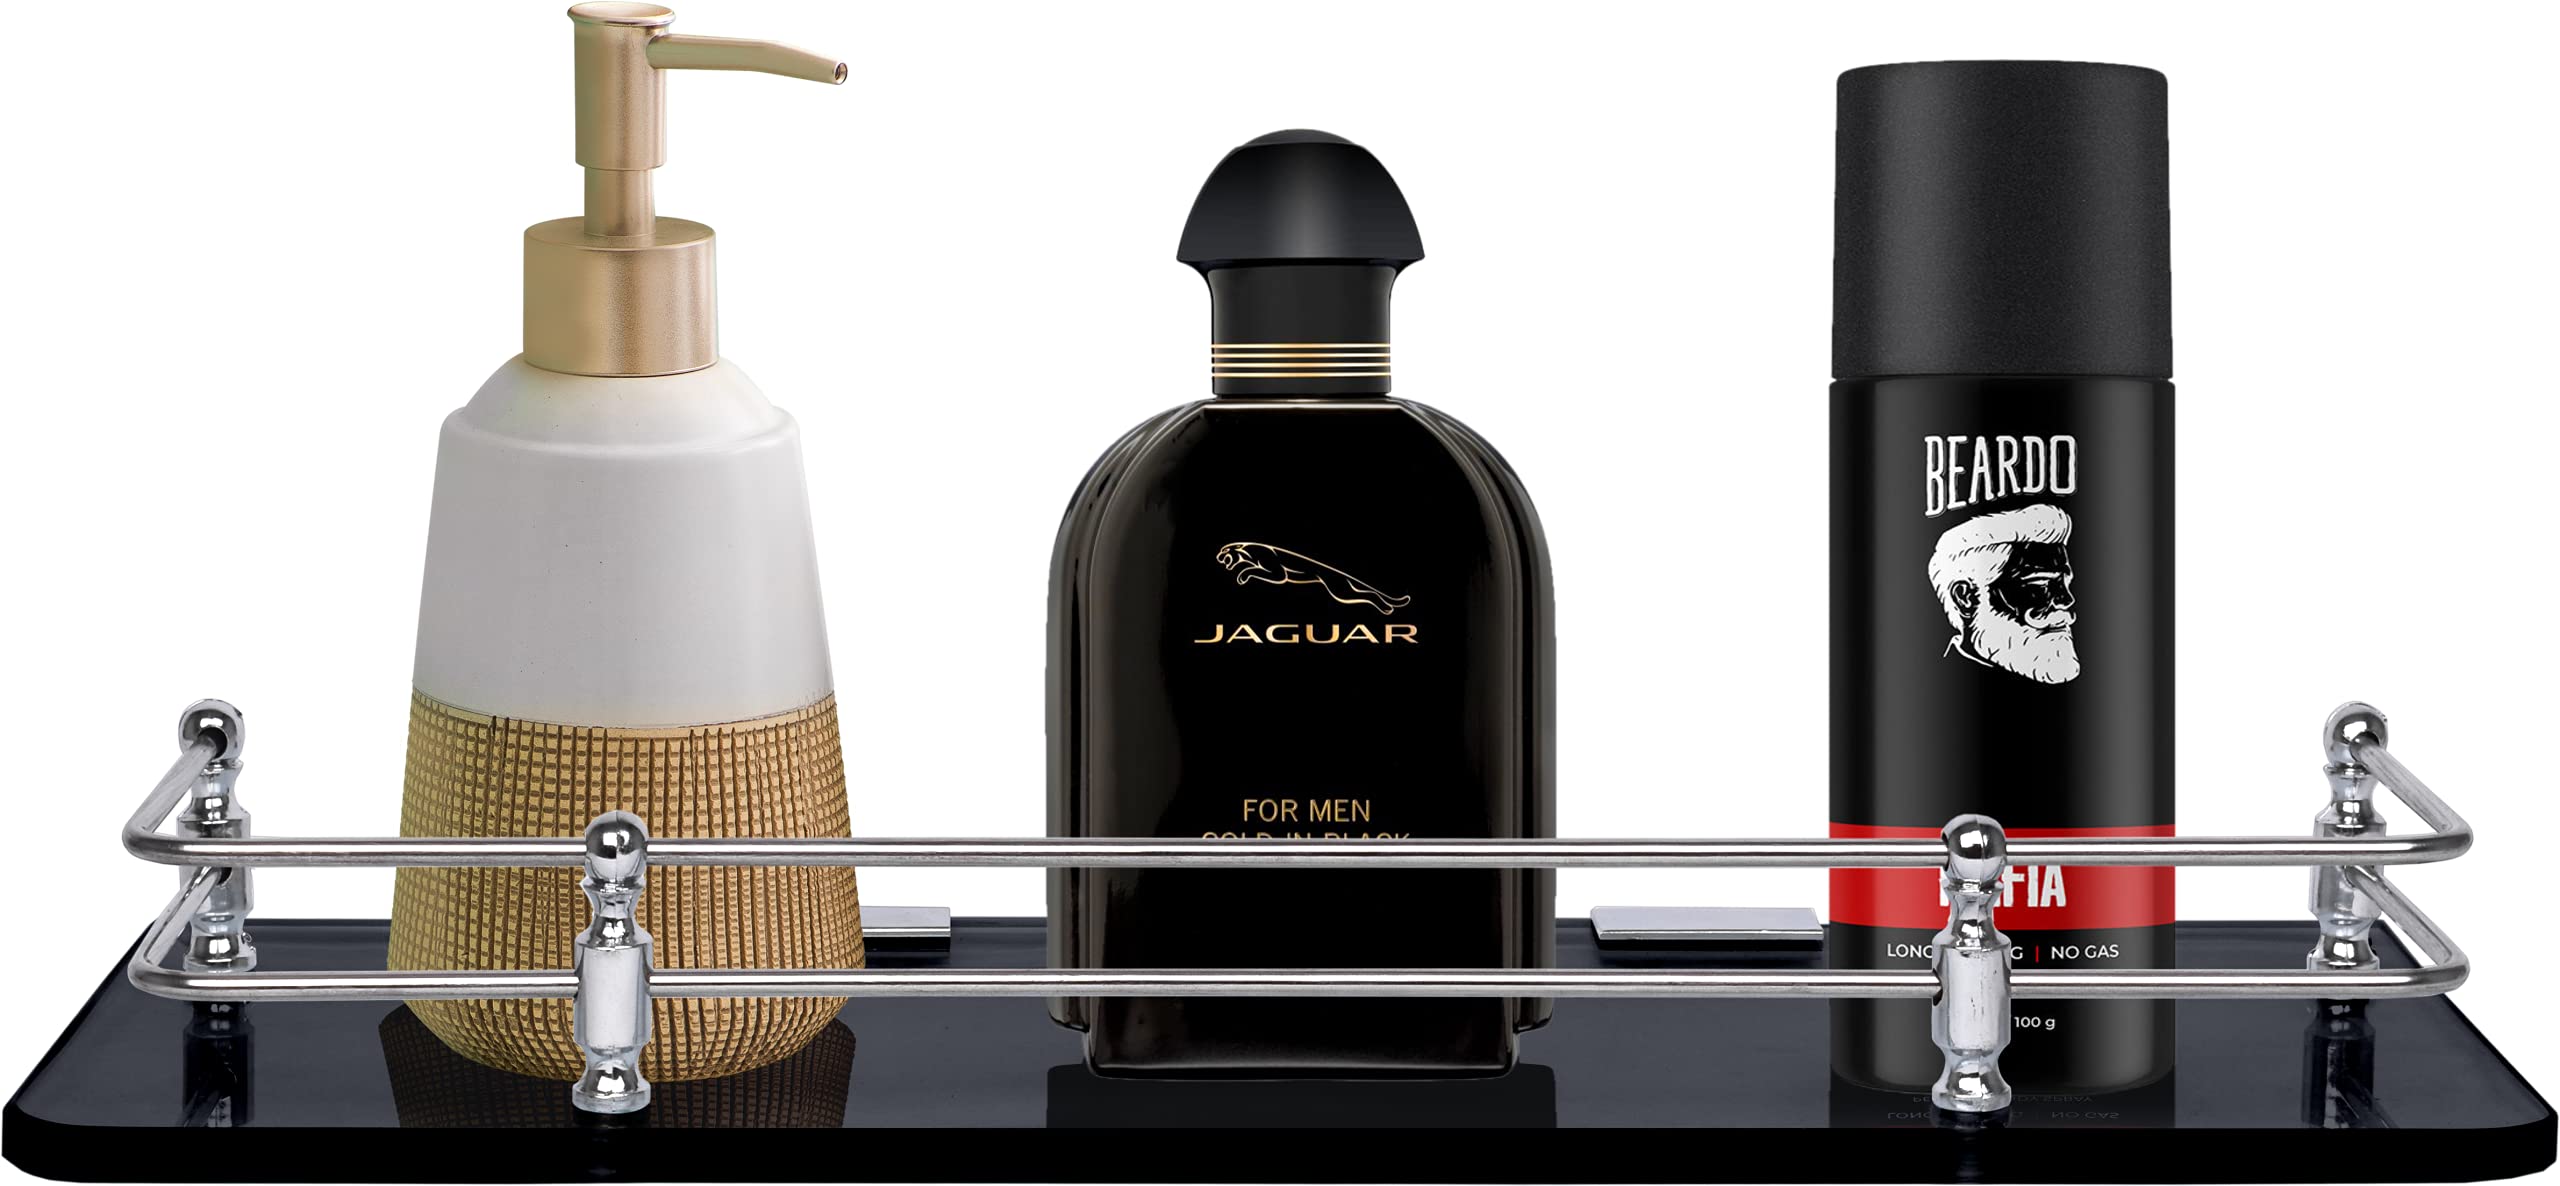 Plantex Premium Black Glass Shelf for Bathroom/Kitchen/Living Room - Bathroom Accessories (Polished 12x6 - Pack of 2)